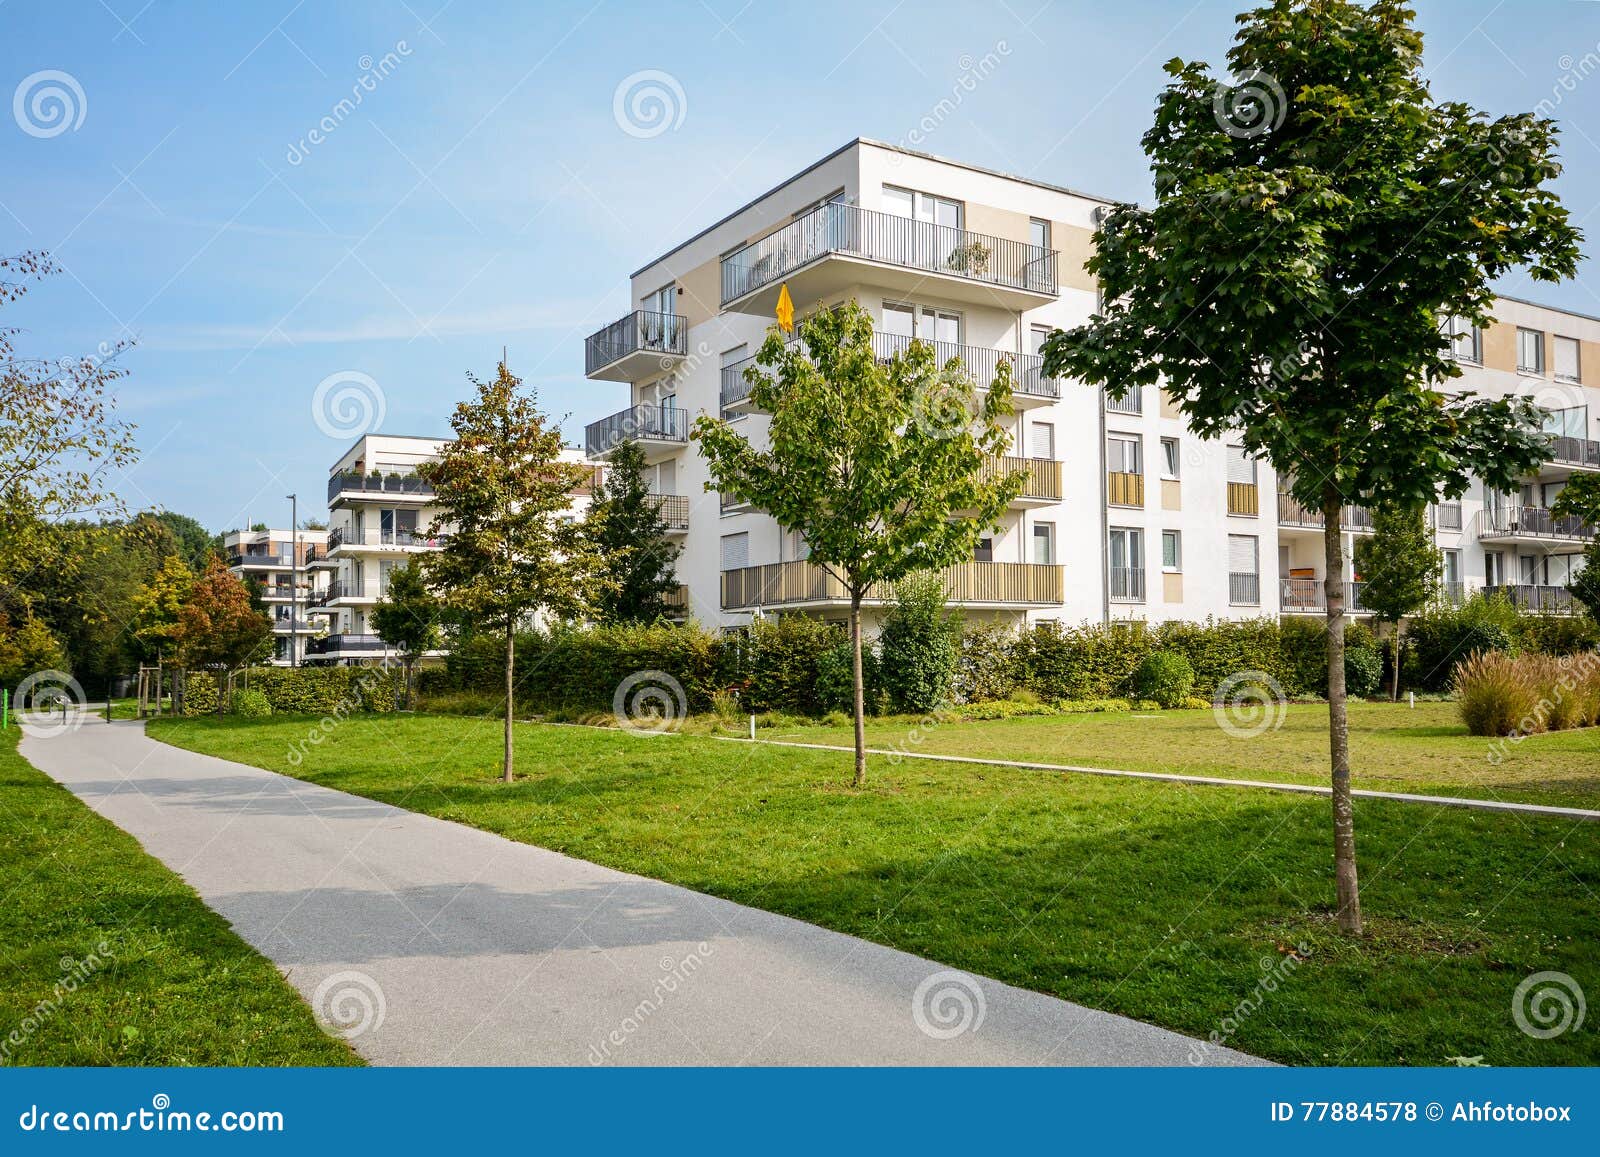 new apartment building - modern residential development in a green urban settlement